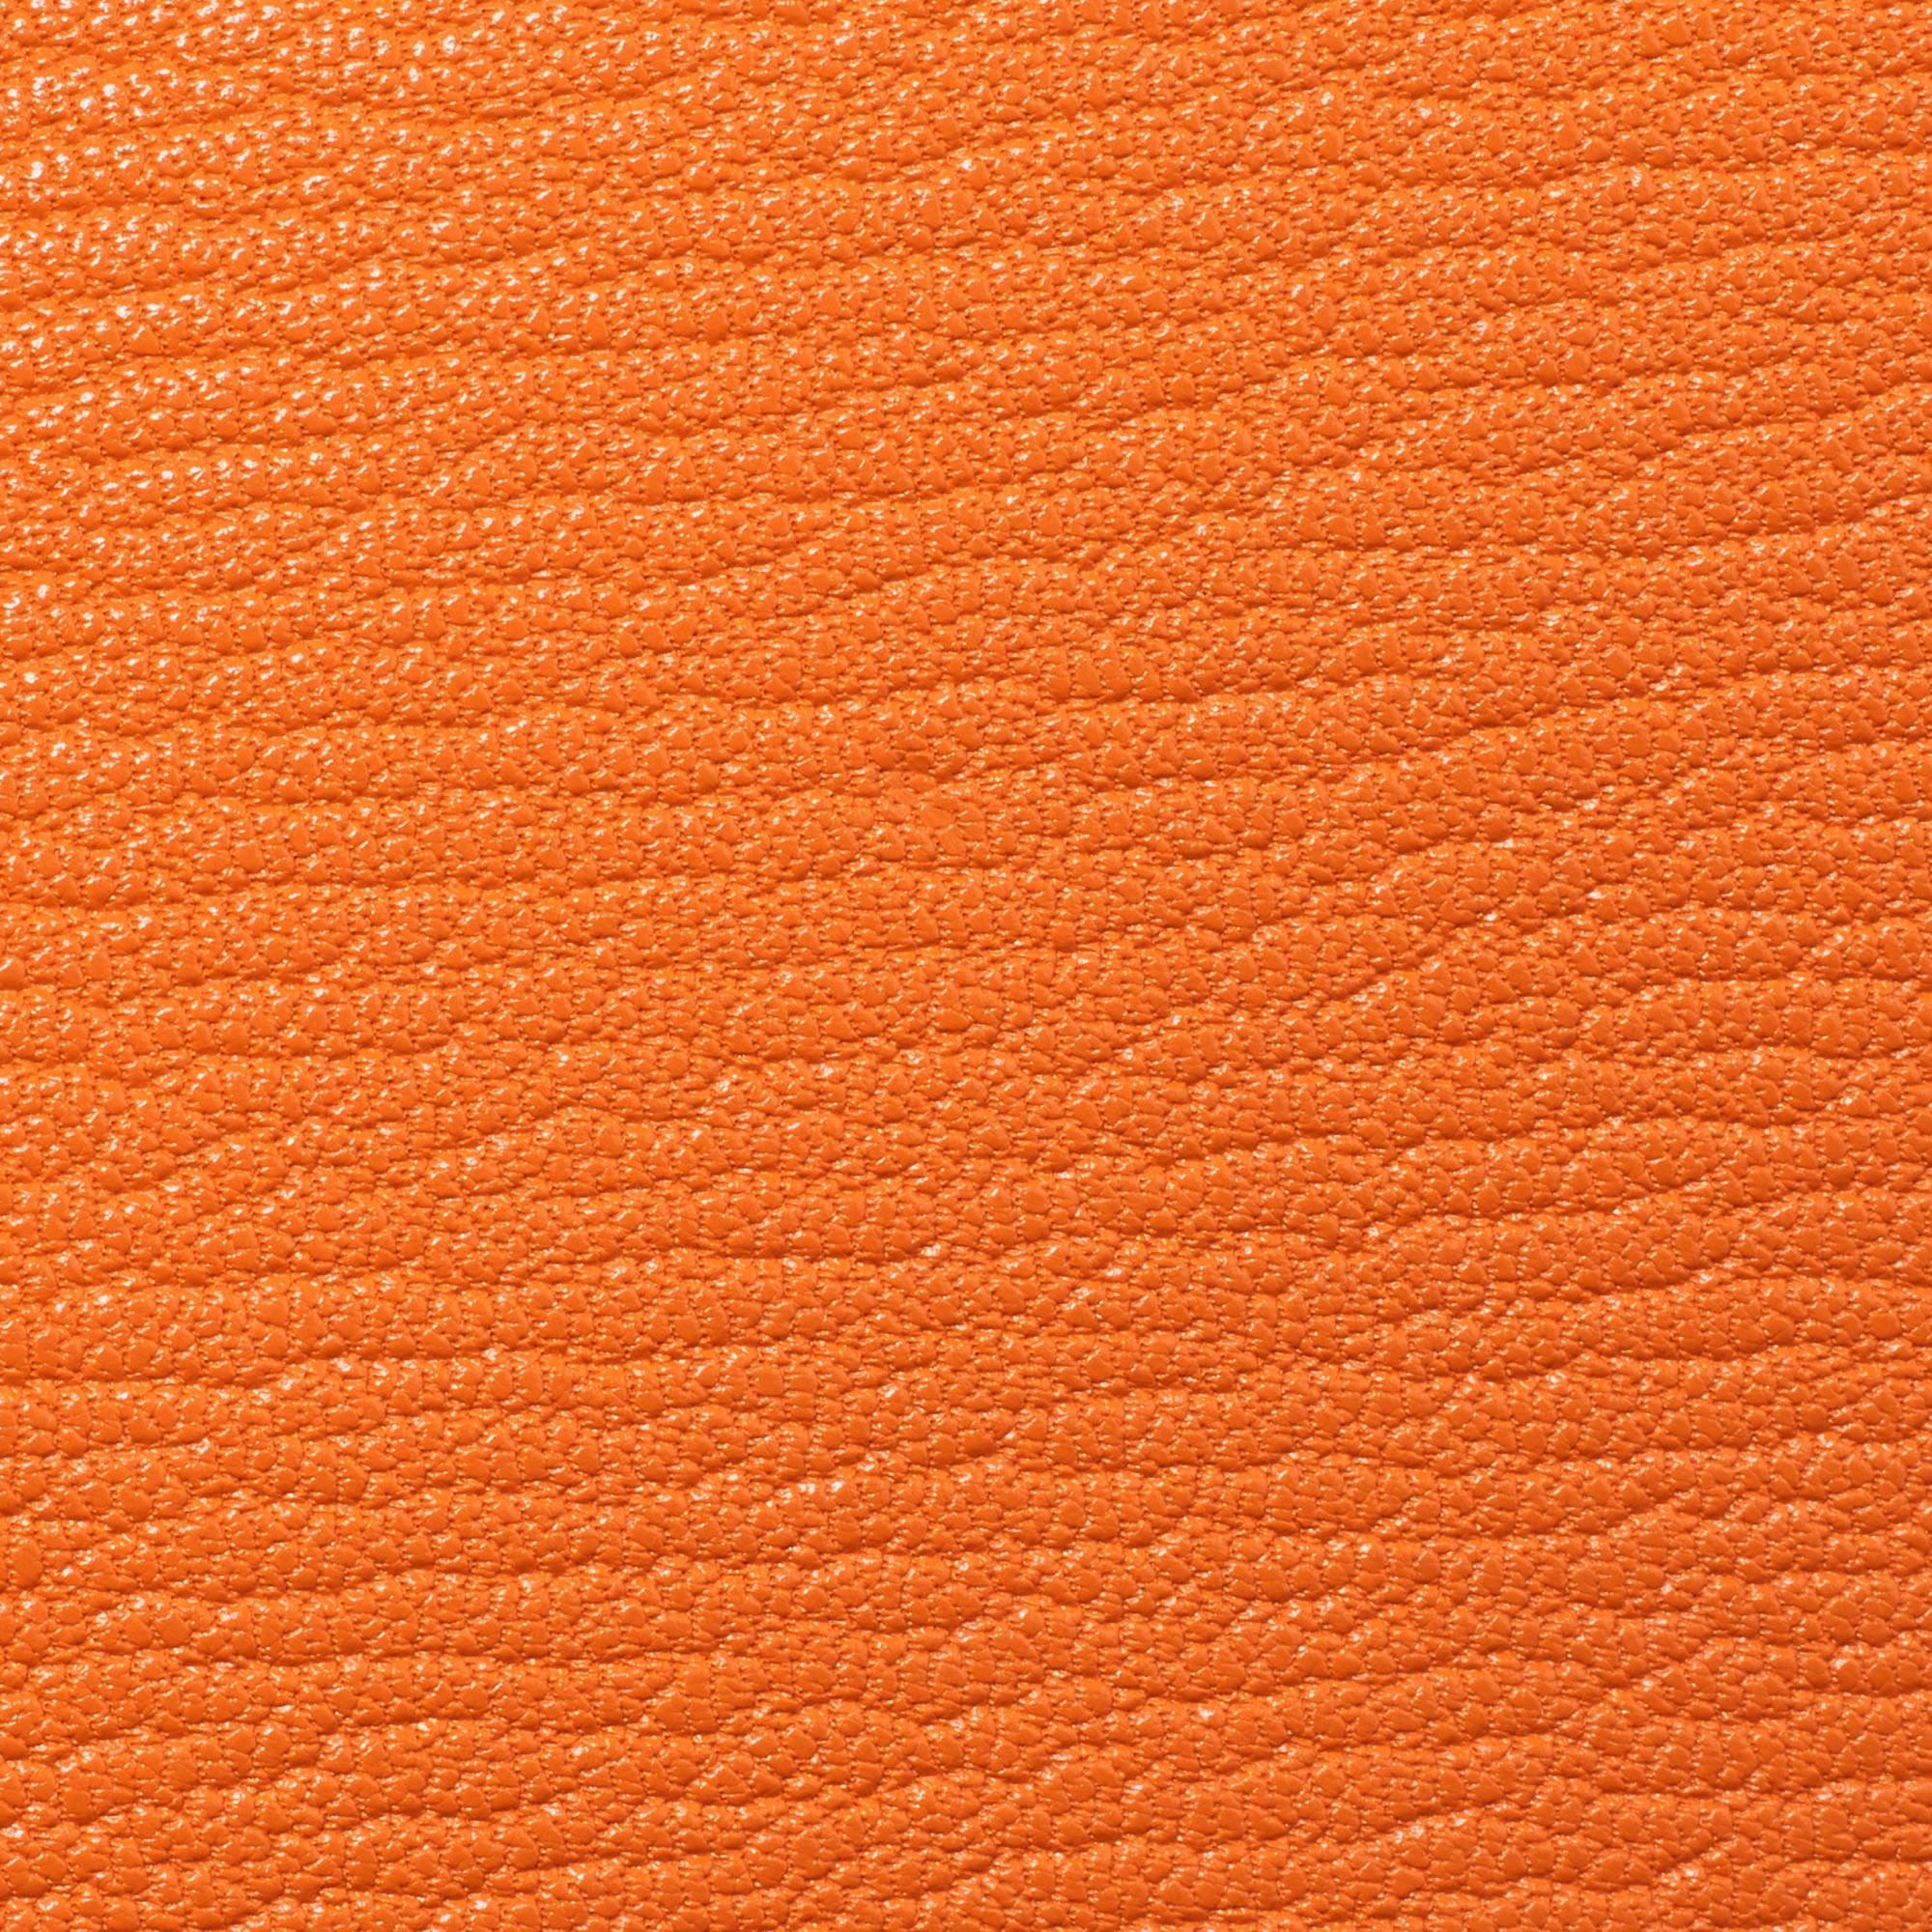 Hermès Orange Chèvre Mysore Leather Palladium Finish Geta Sangle Bag 2